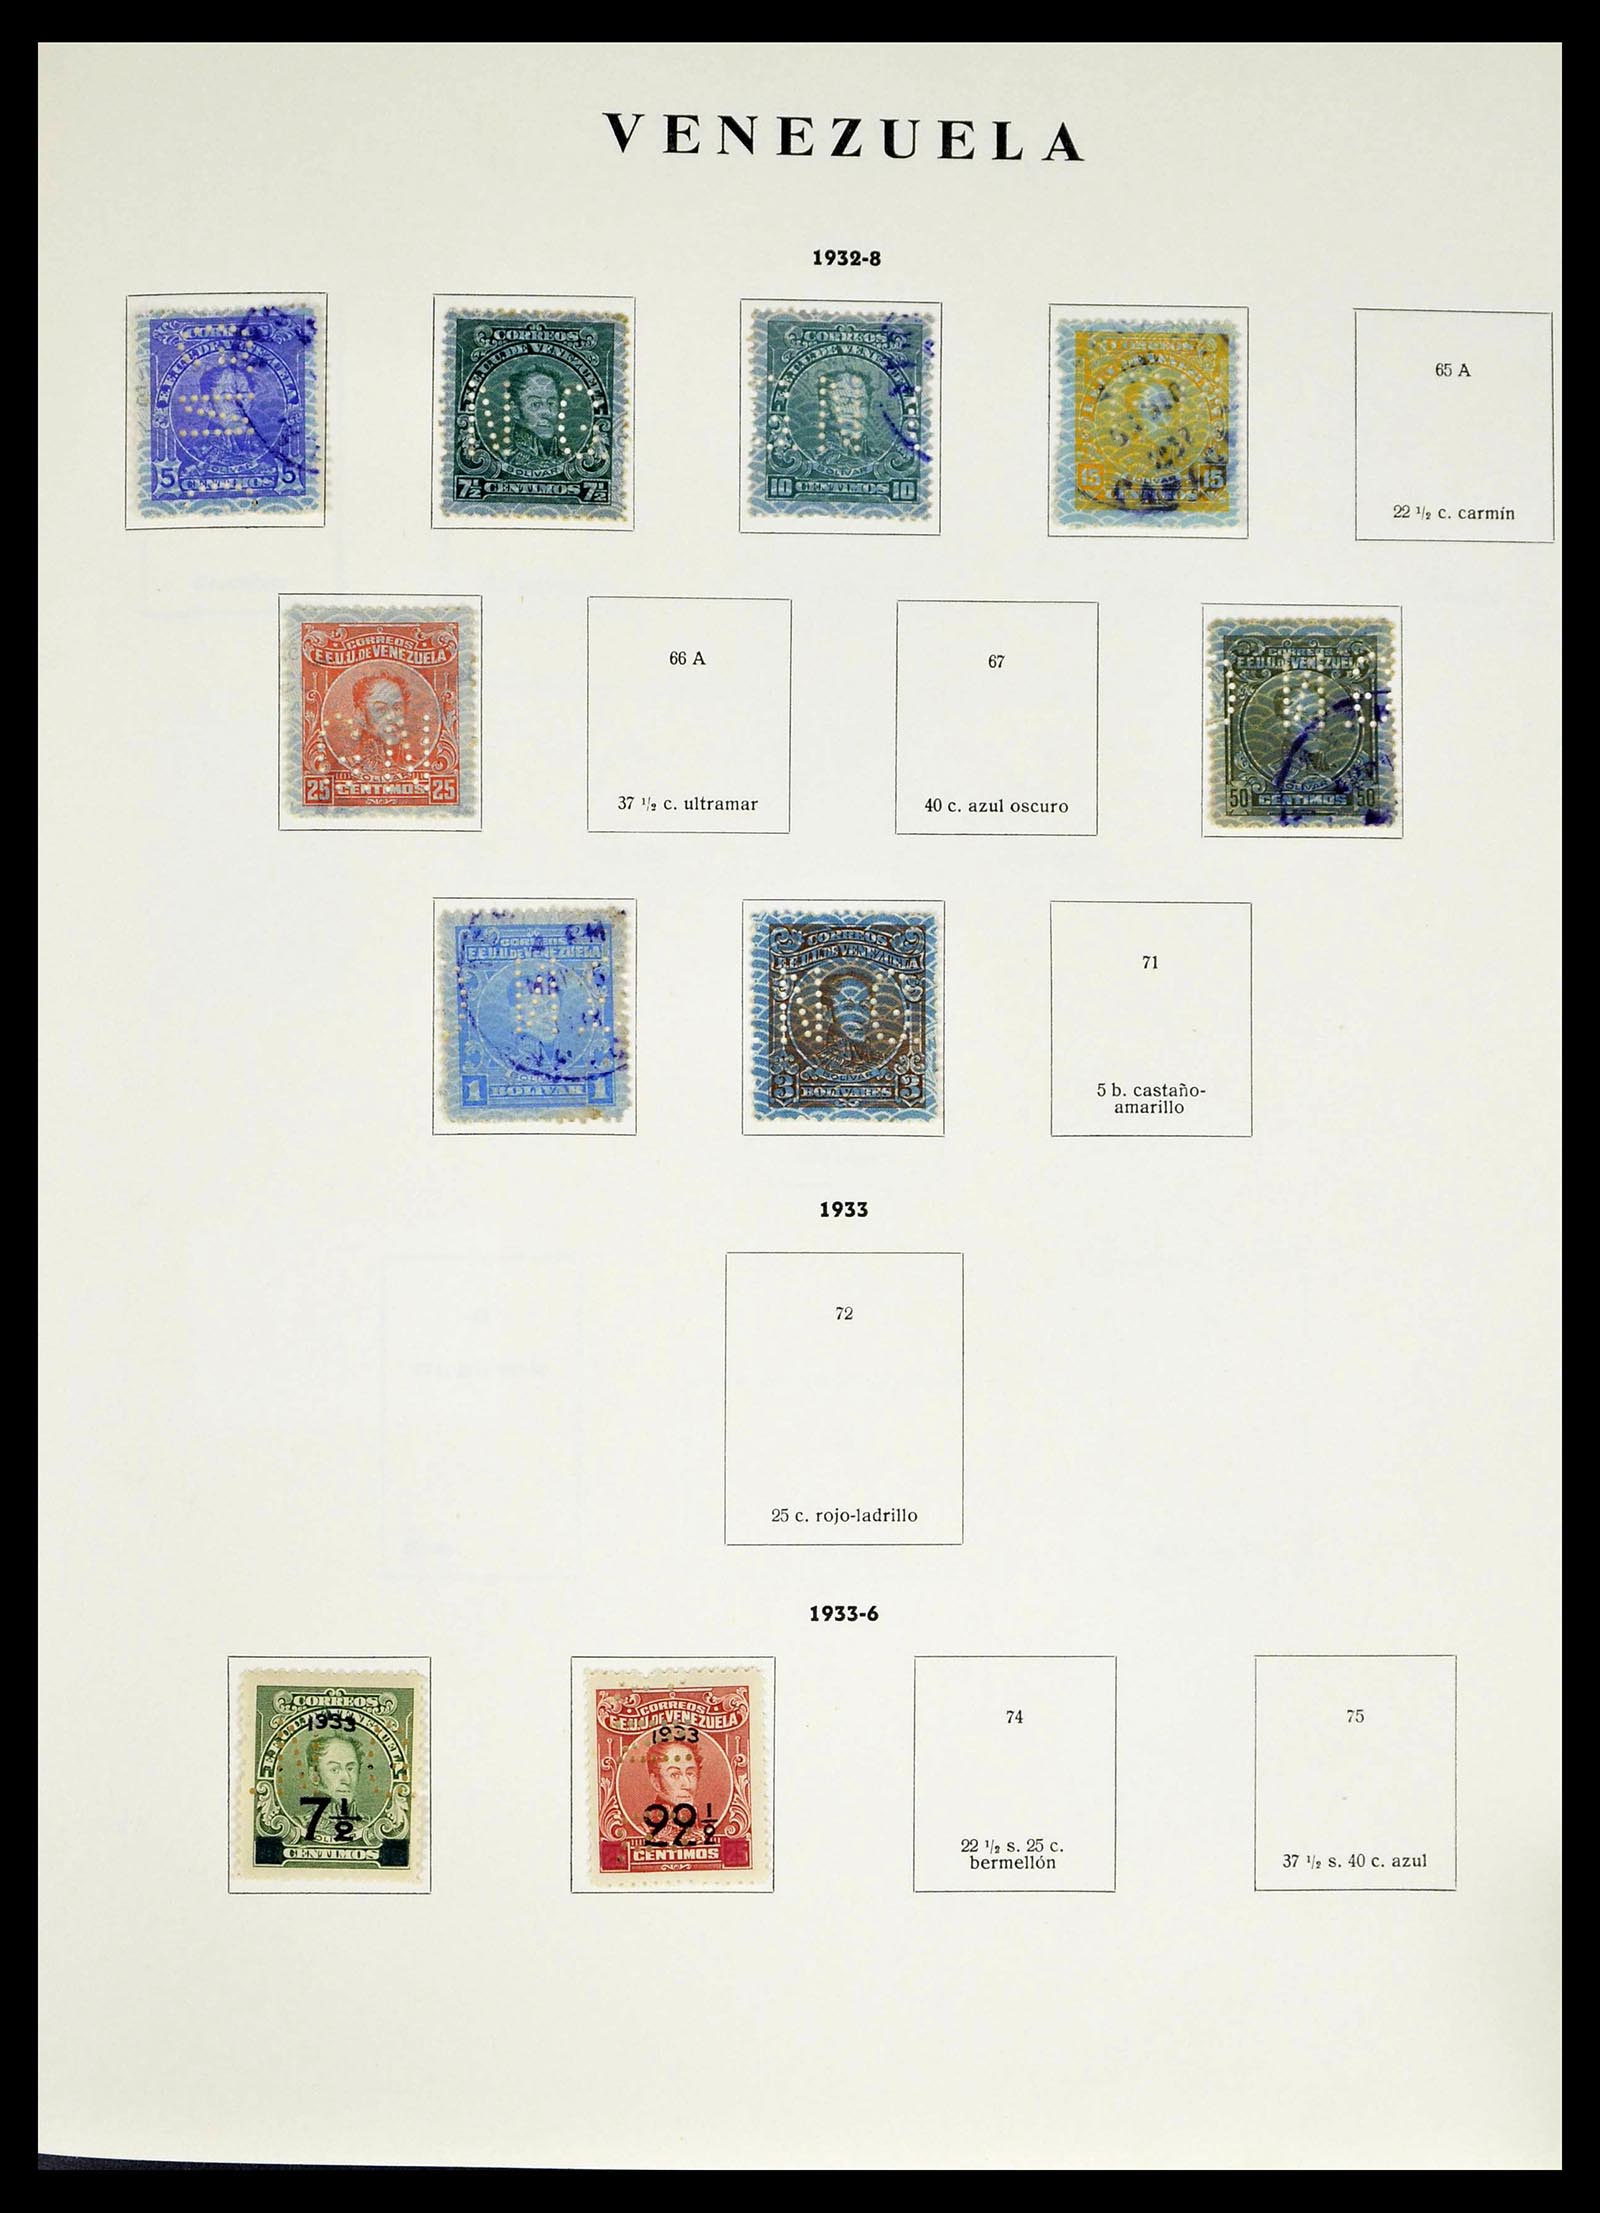 39223 0199 - Stamp collection 39223 Venezuela 1859-1984.